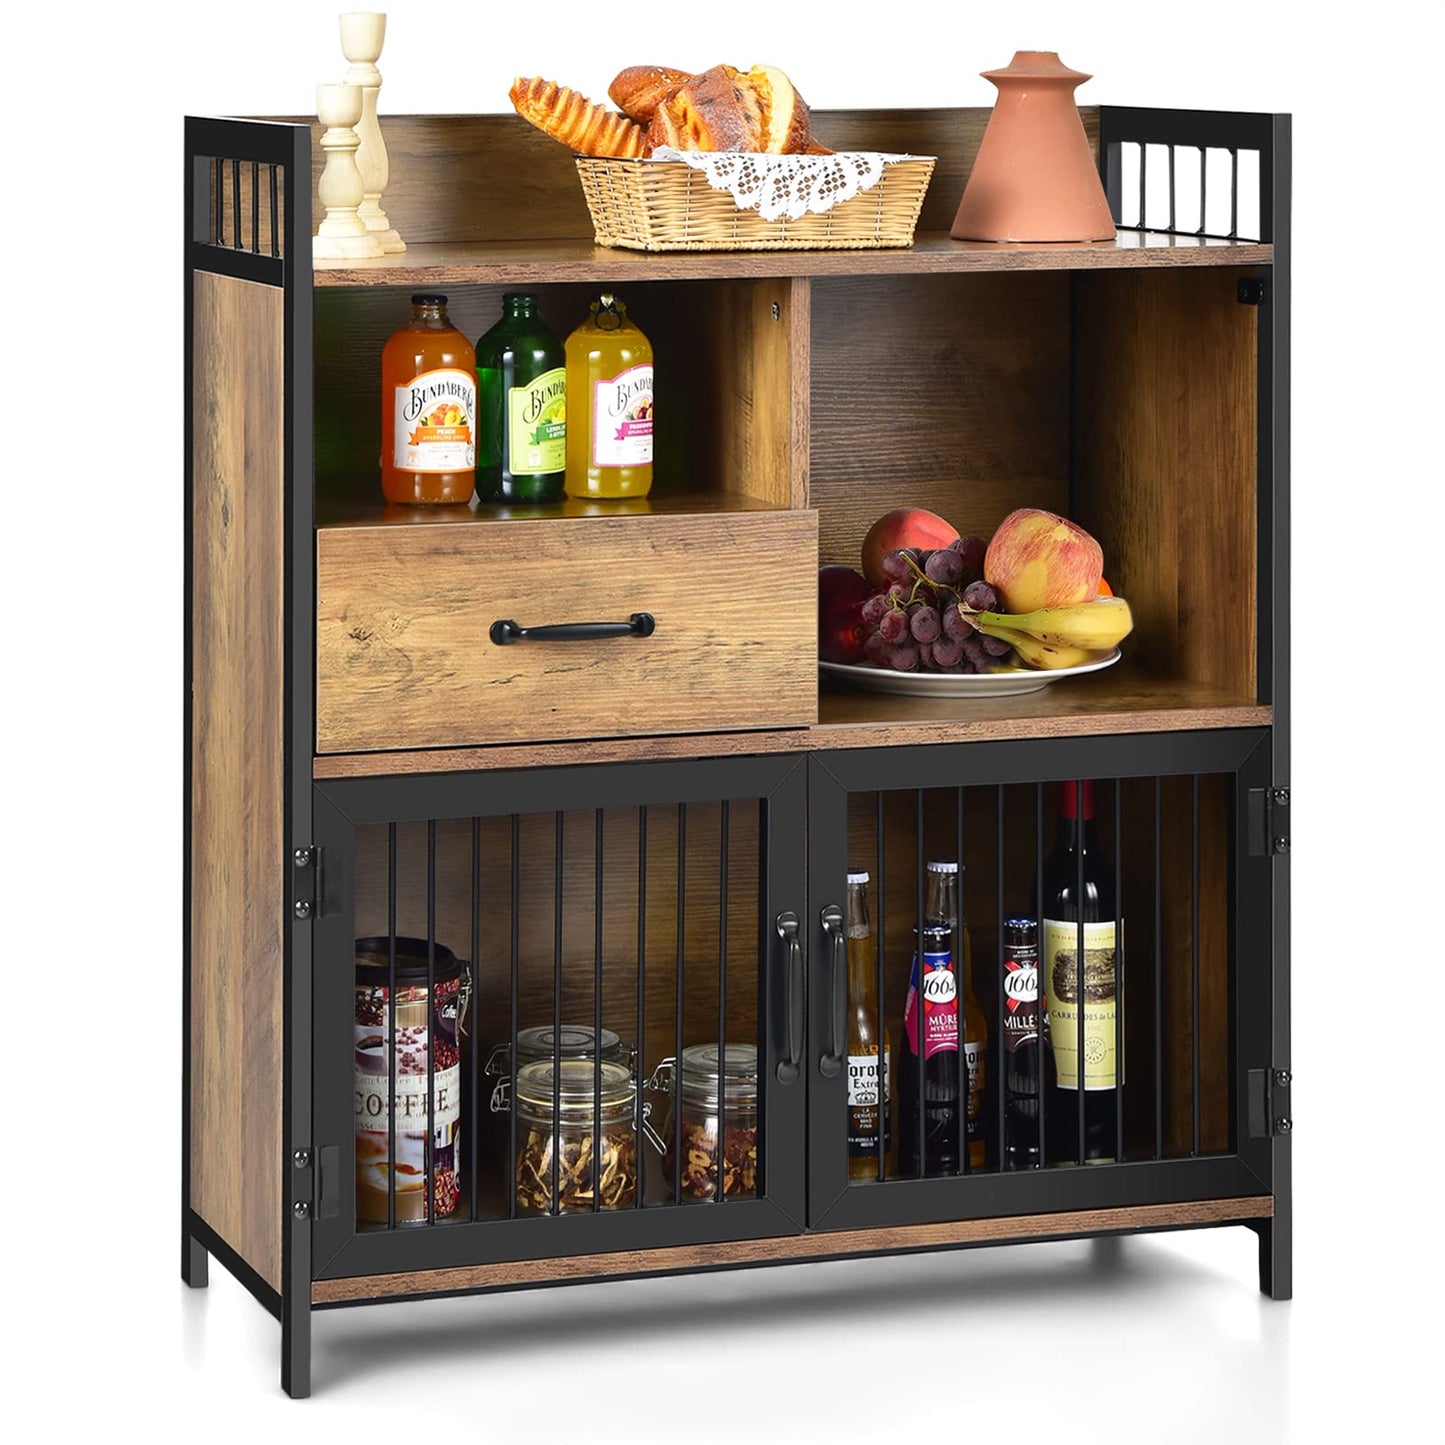 Giantex Buffet Cabinet with Storage, Kitchen Sideboard, 2 Door Storage Cabinet with Drawer, Wood Shelves Metal Frame, Industrial Cupboard Utensil Tableware Organizer